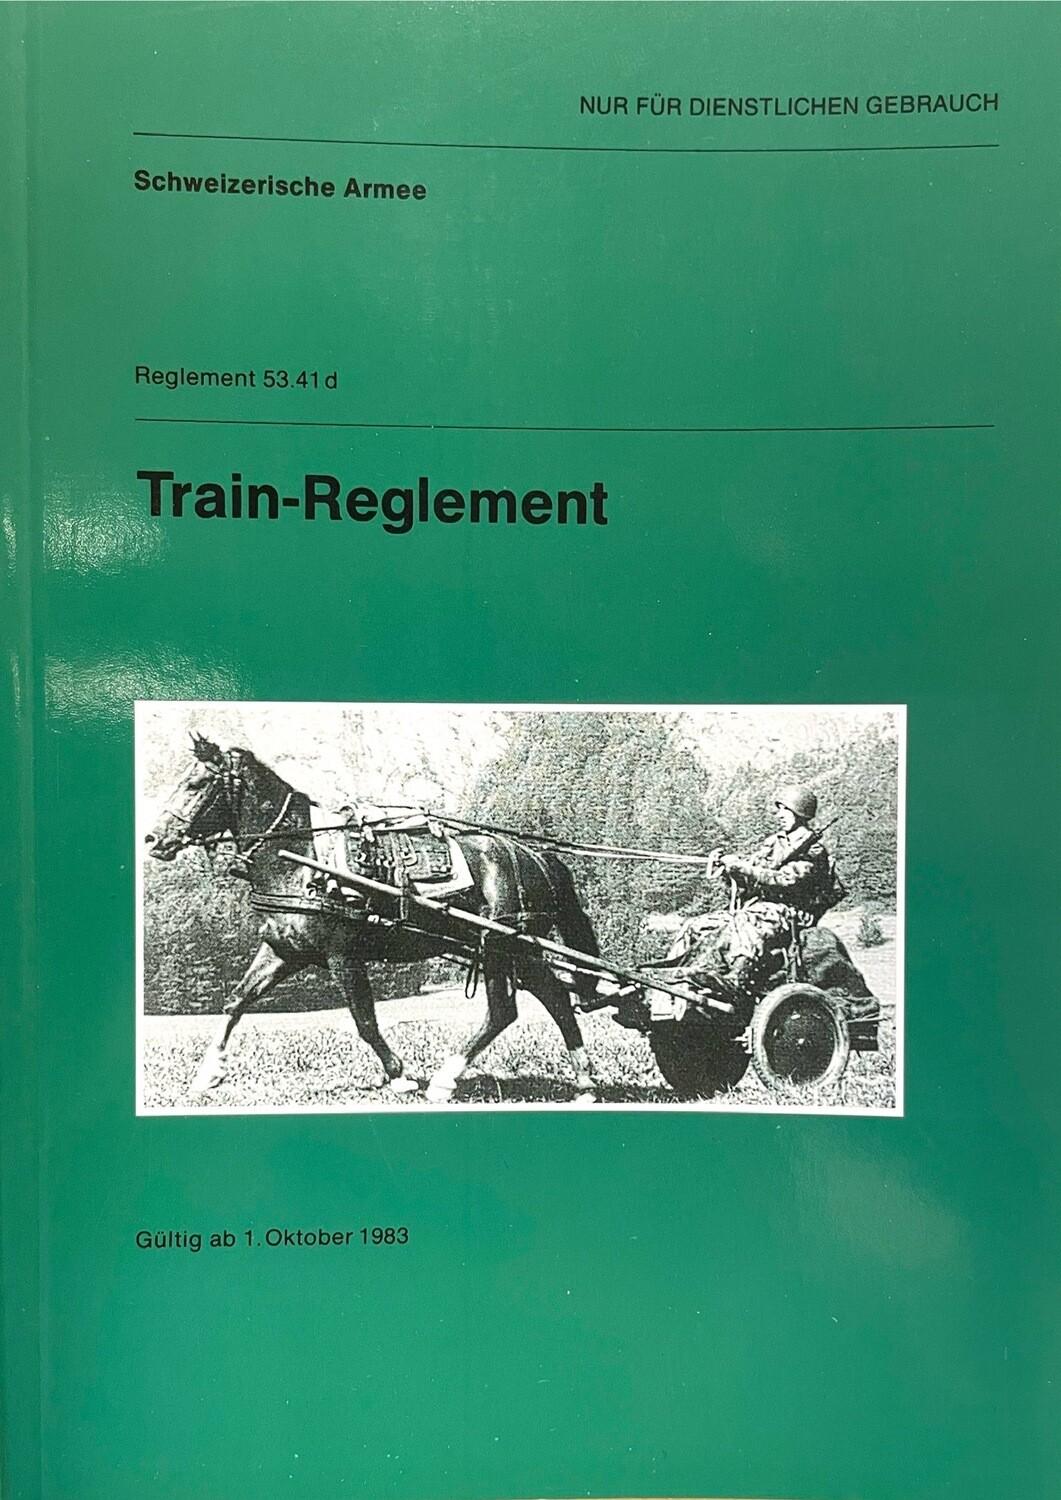 Militär Train-Reglement Schweizer Armee/ Reglement 53.41d